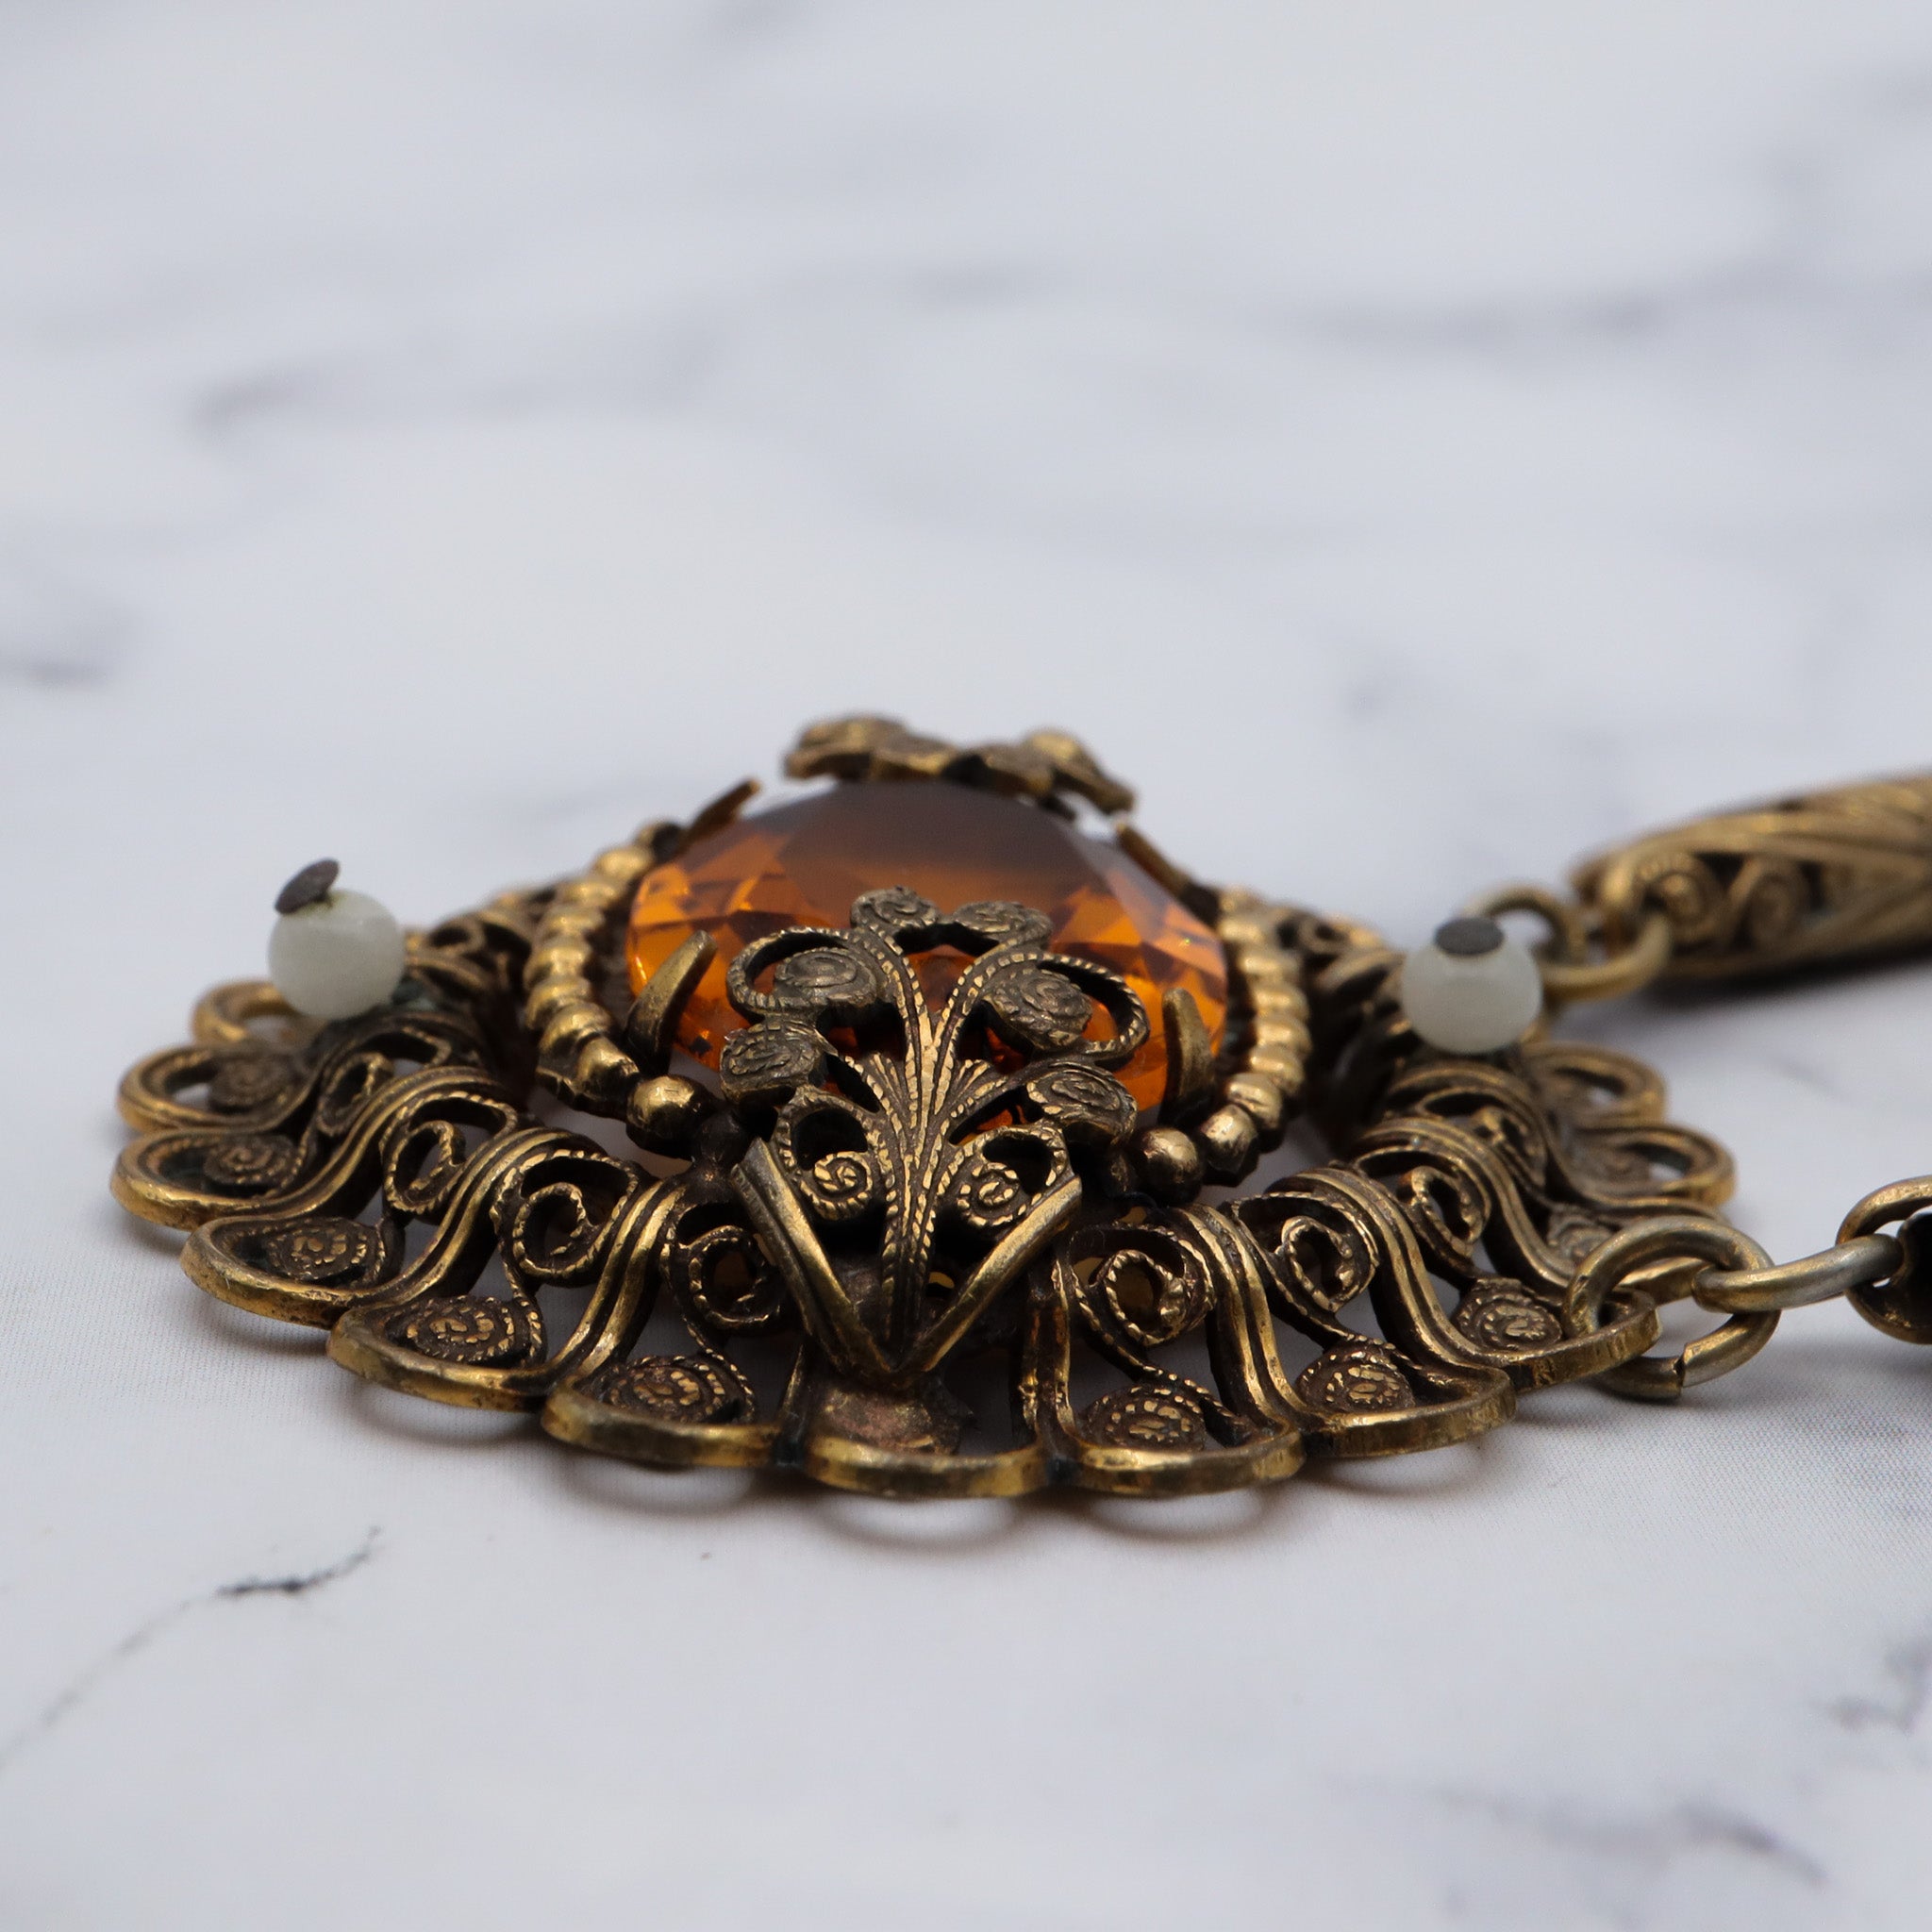 Antique Victorian brass filigree & glass citrine necklace, 17”